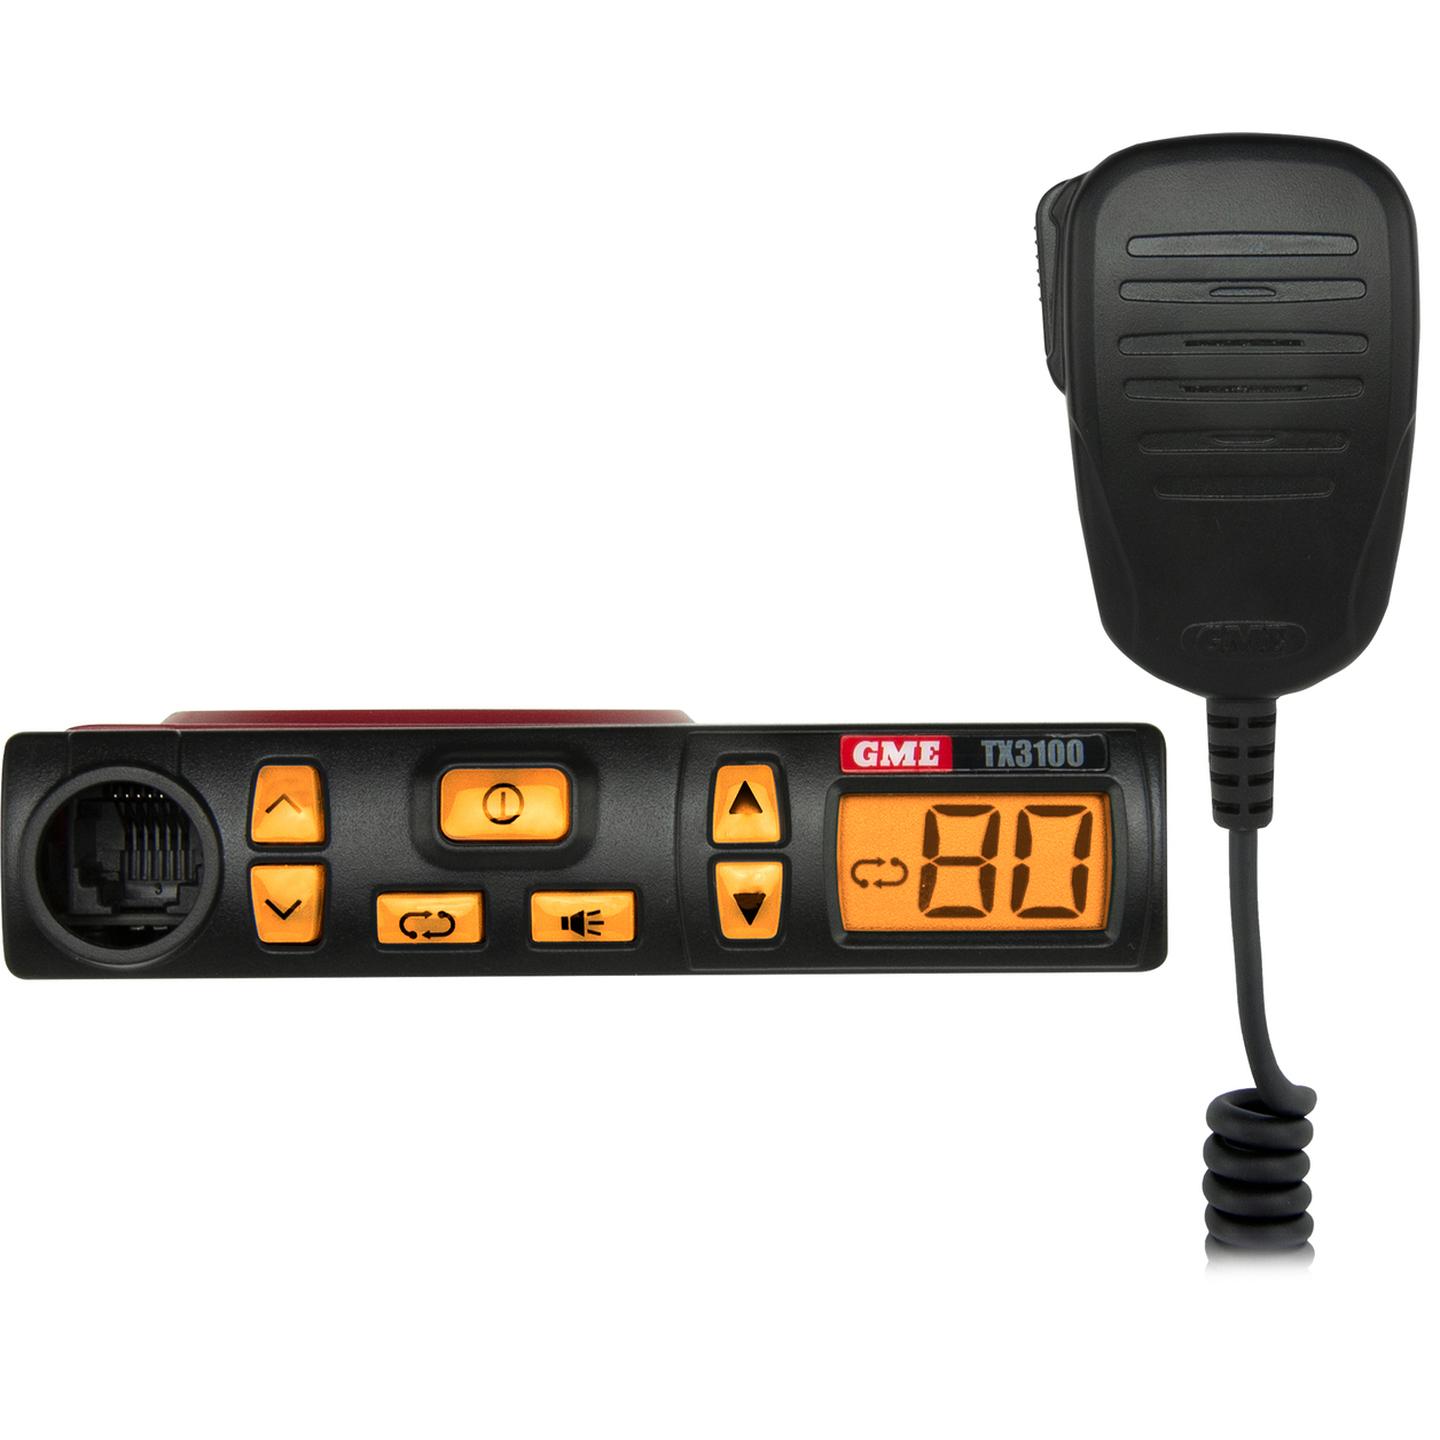 GME 5 Watt Super Compact UHF CB Radio